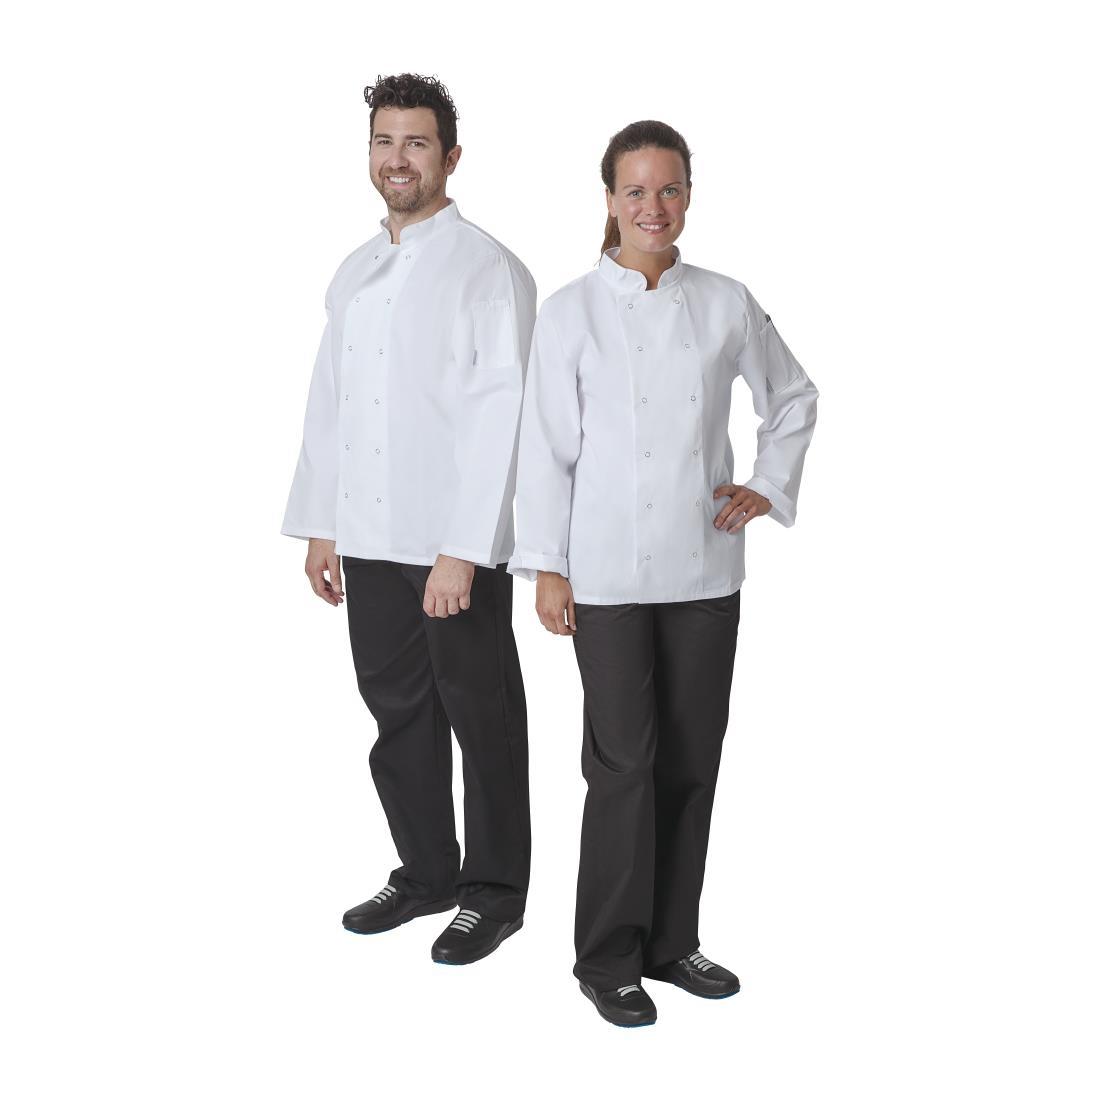 Whites Vegas Unisex Chefs Jacket Long Sleeve White L - A134-L  - 3